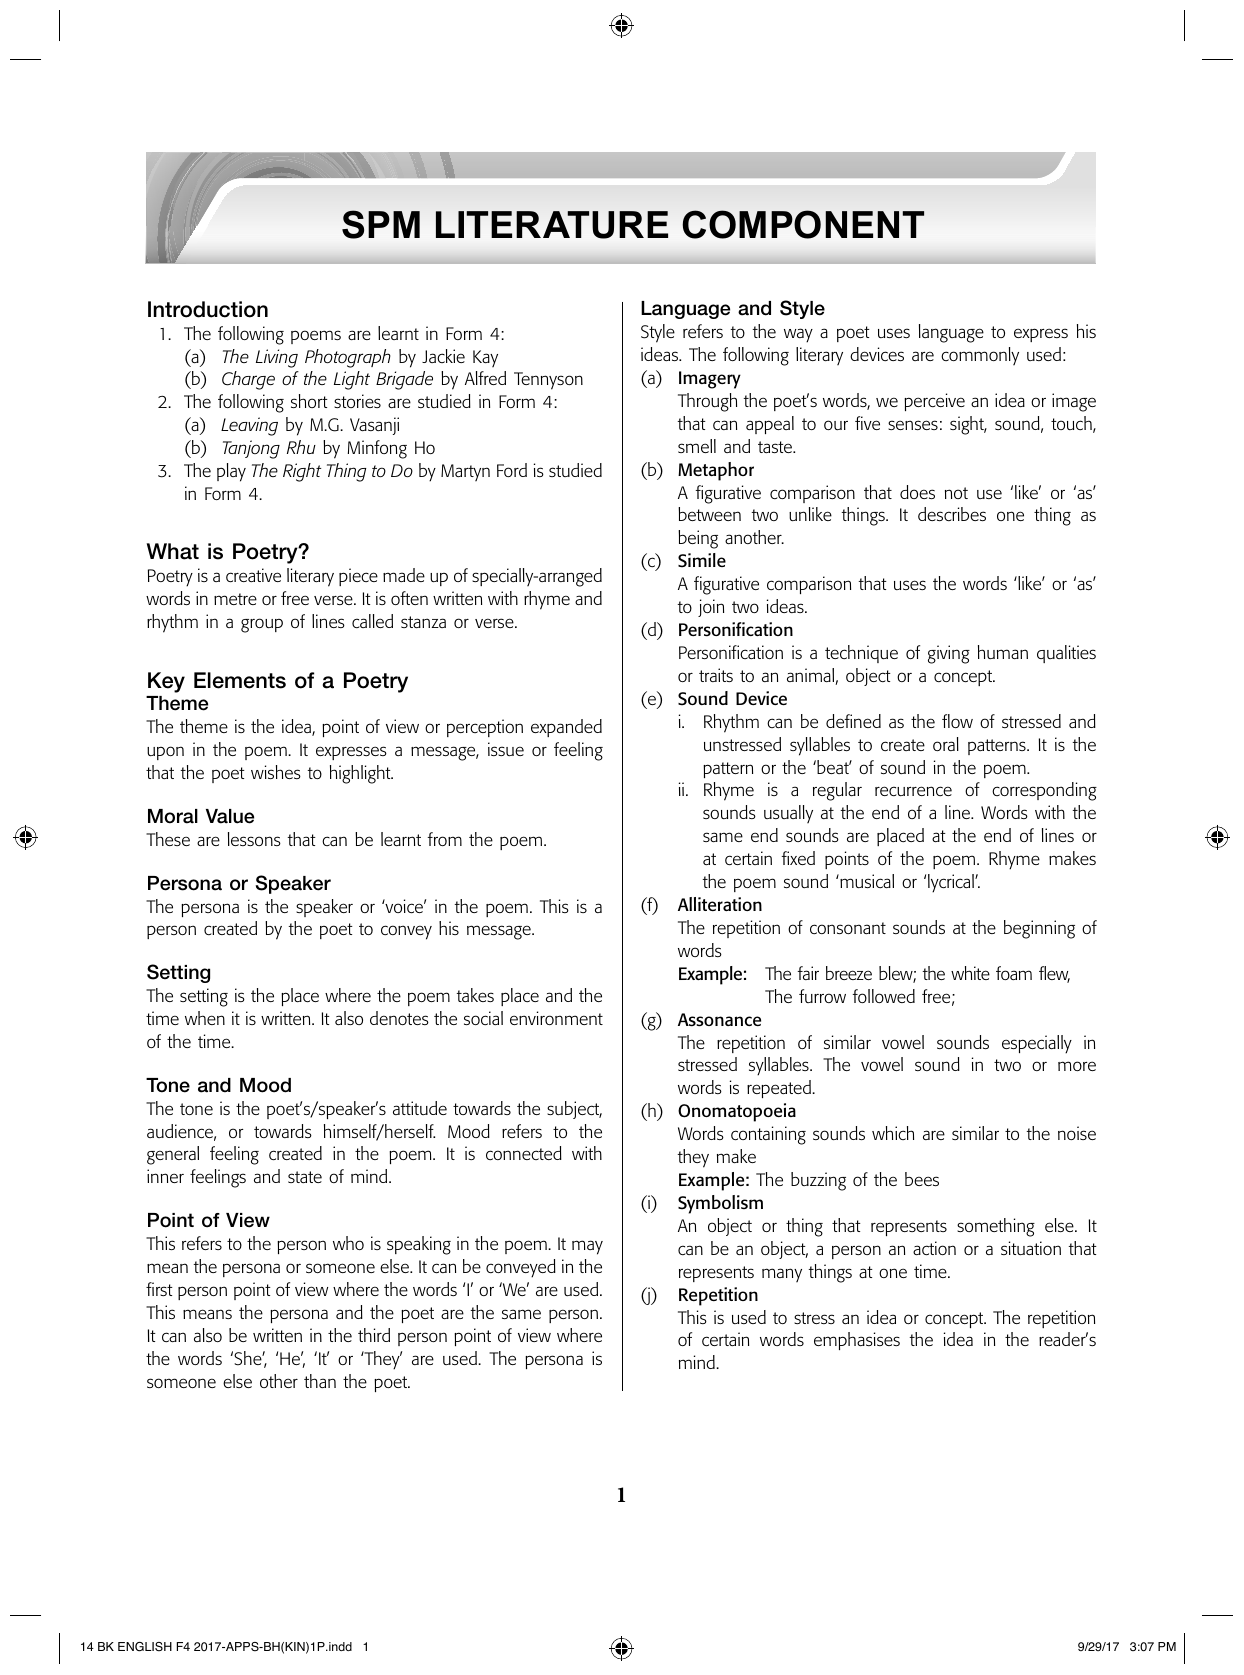 Literature Component Notes Form 4